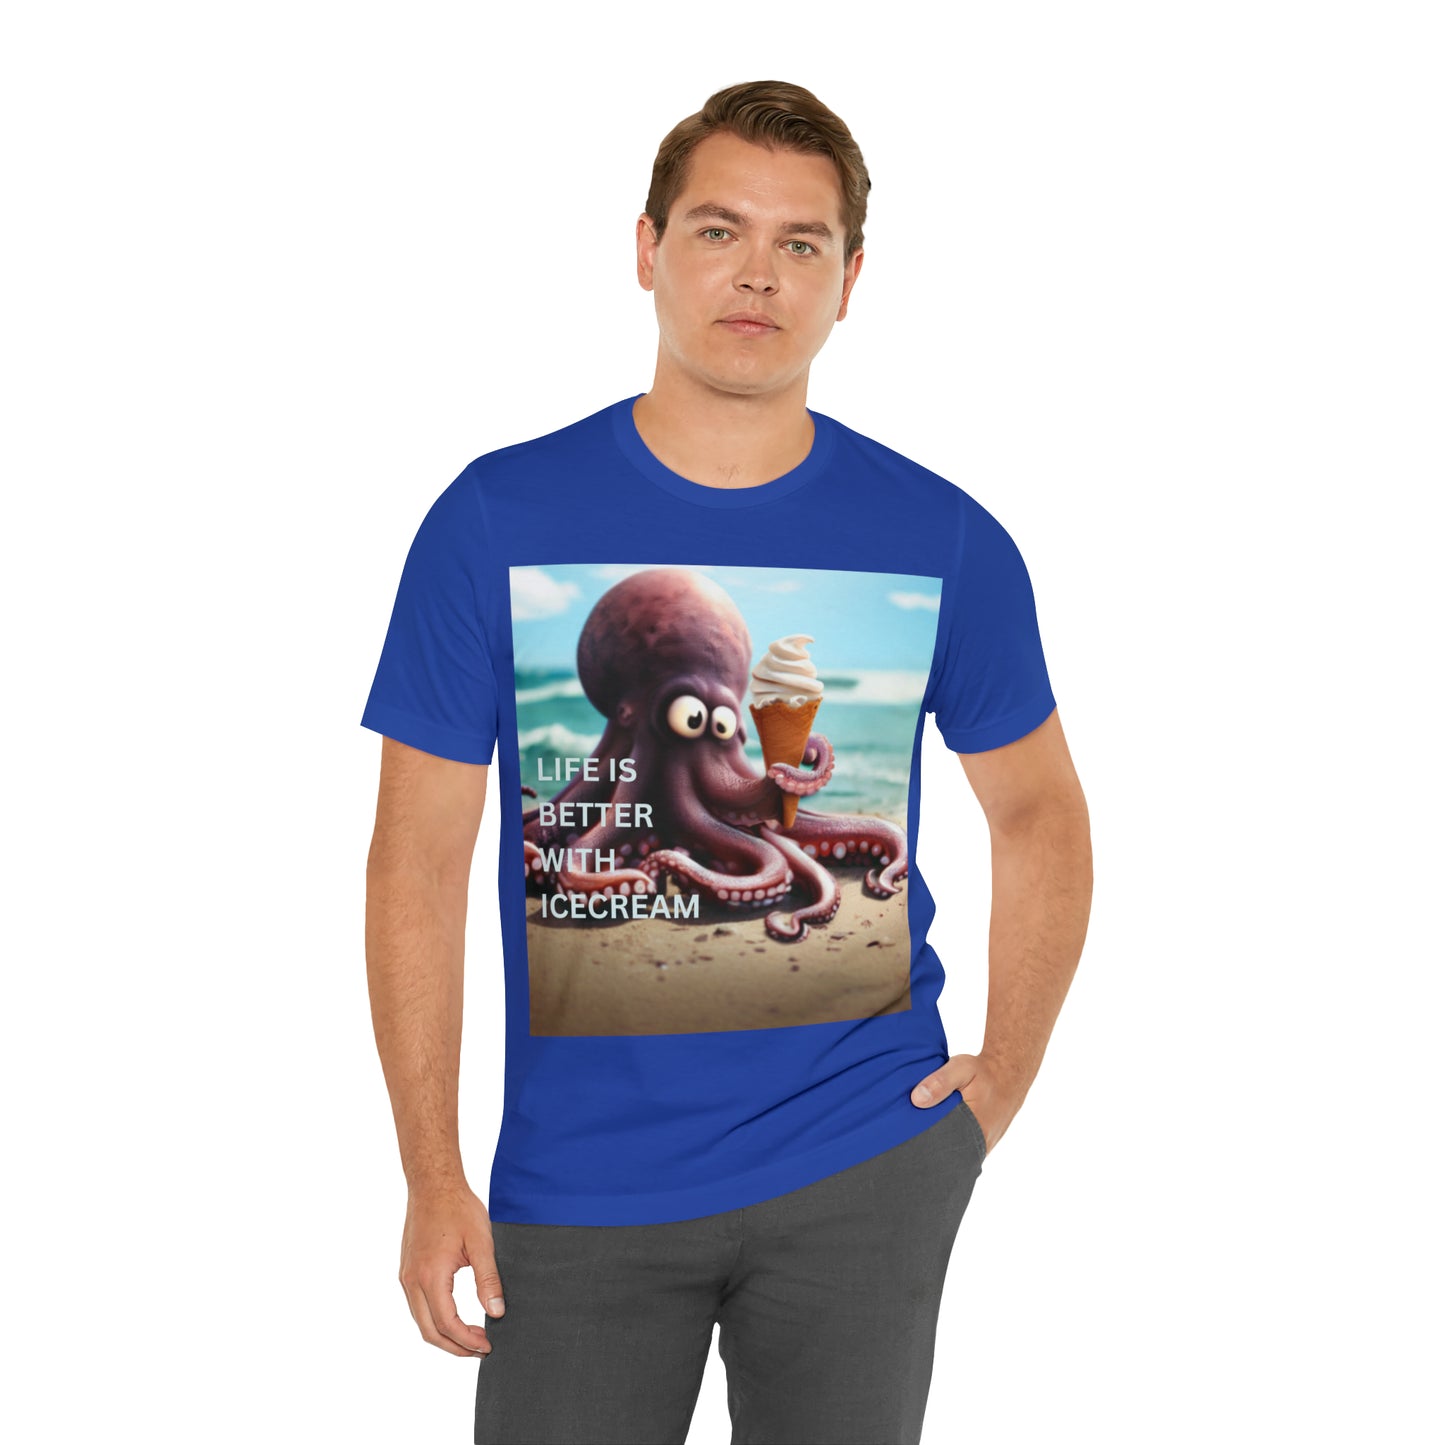 Icecream Octopus T shirt